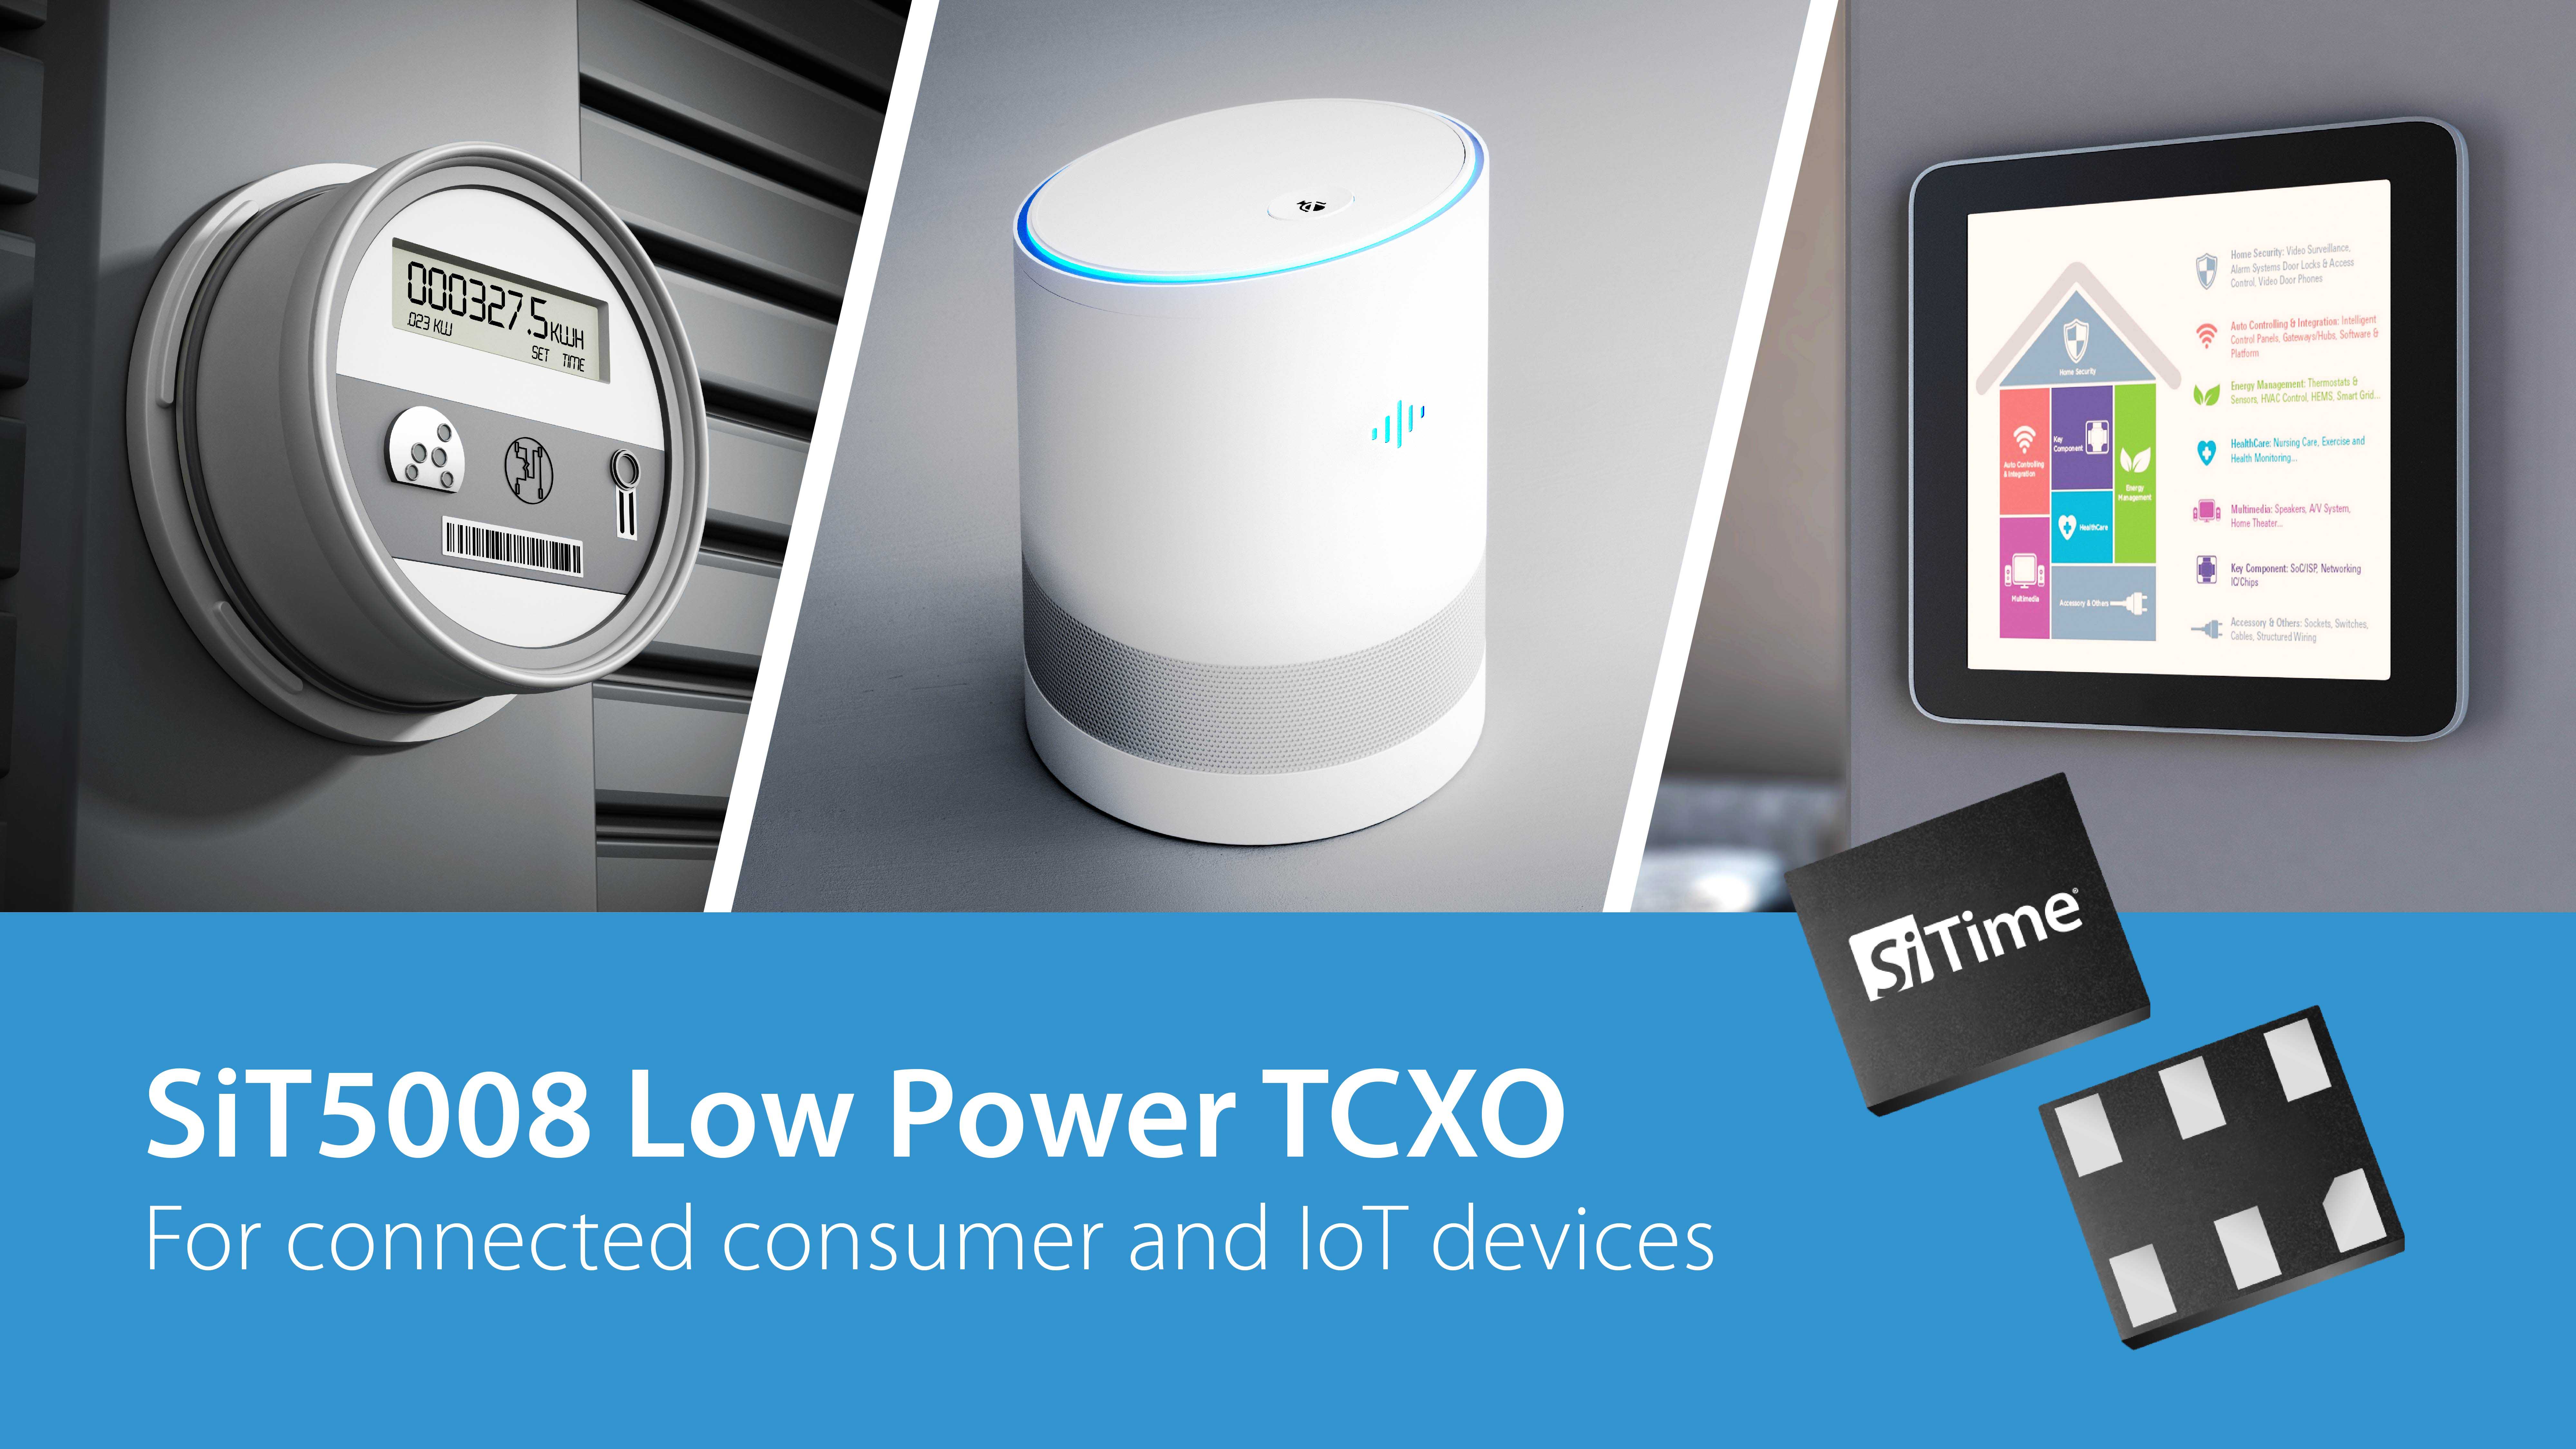 SiTime Expands Consumer, IoT Portfolio with Low Power TCXO